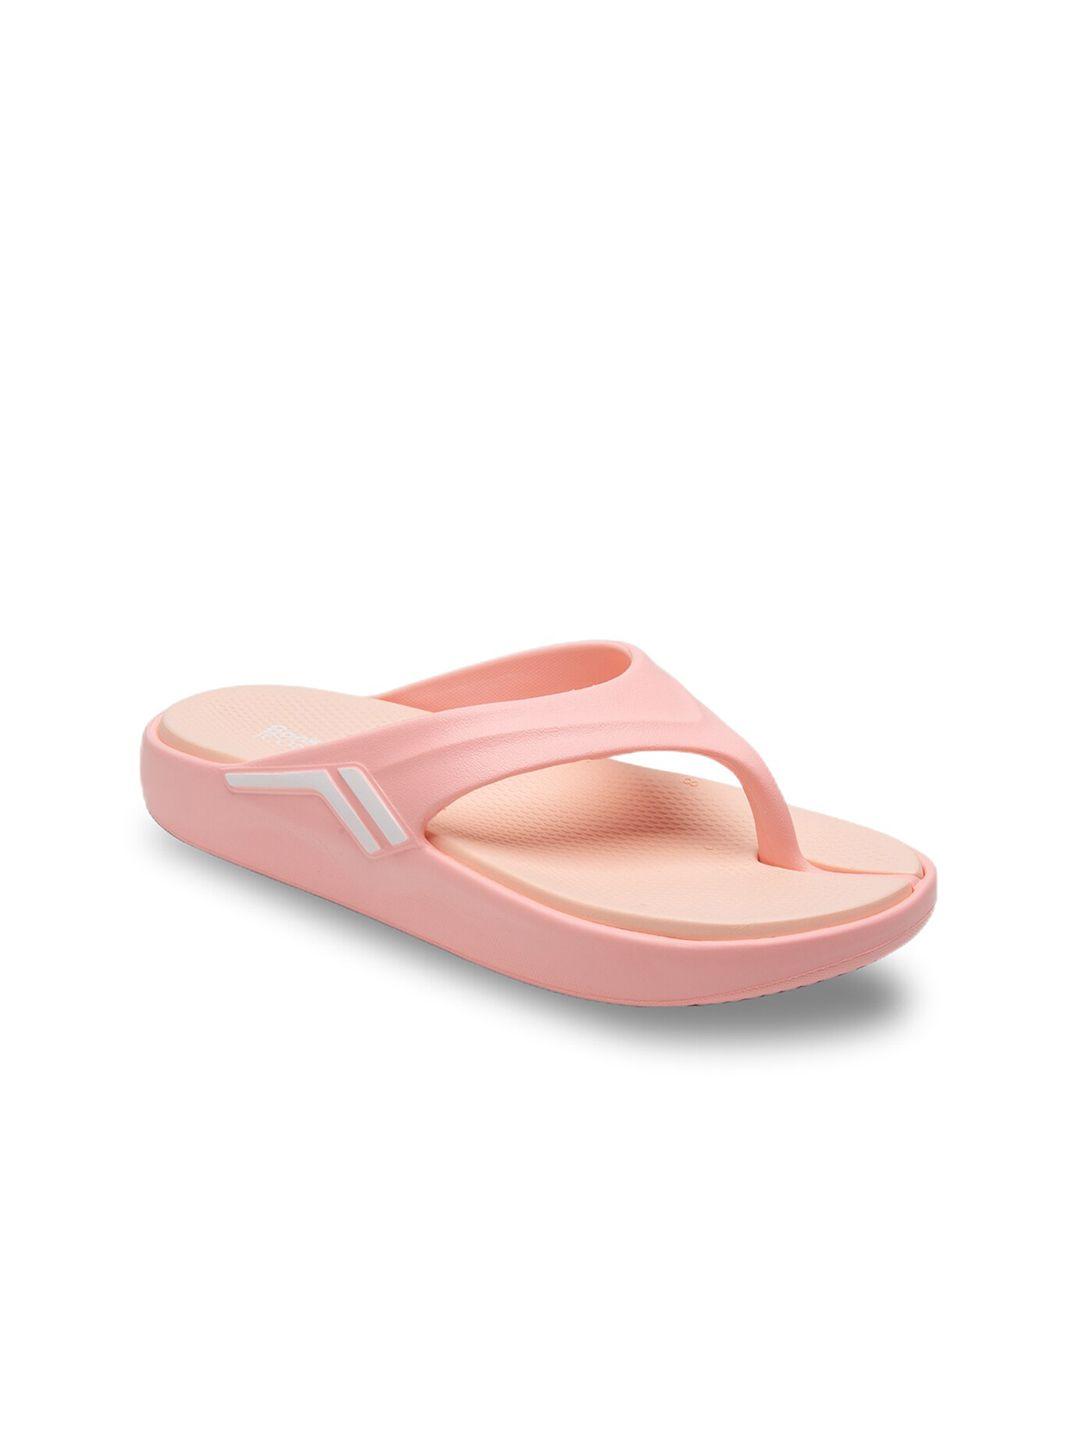 bonkerz-women-pink-croslite-thong-flip-flops